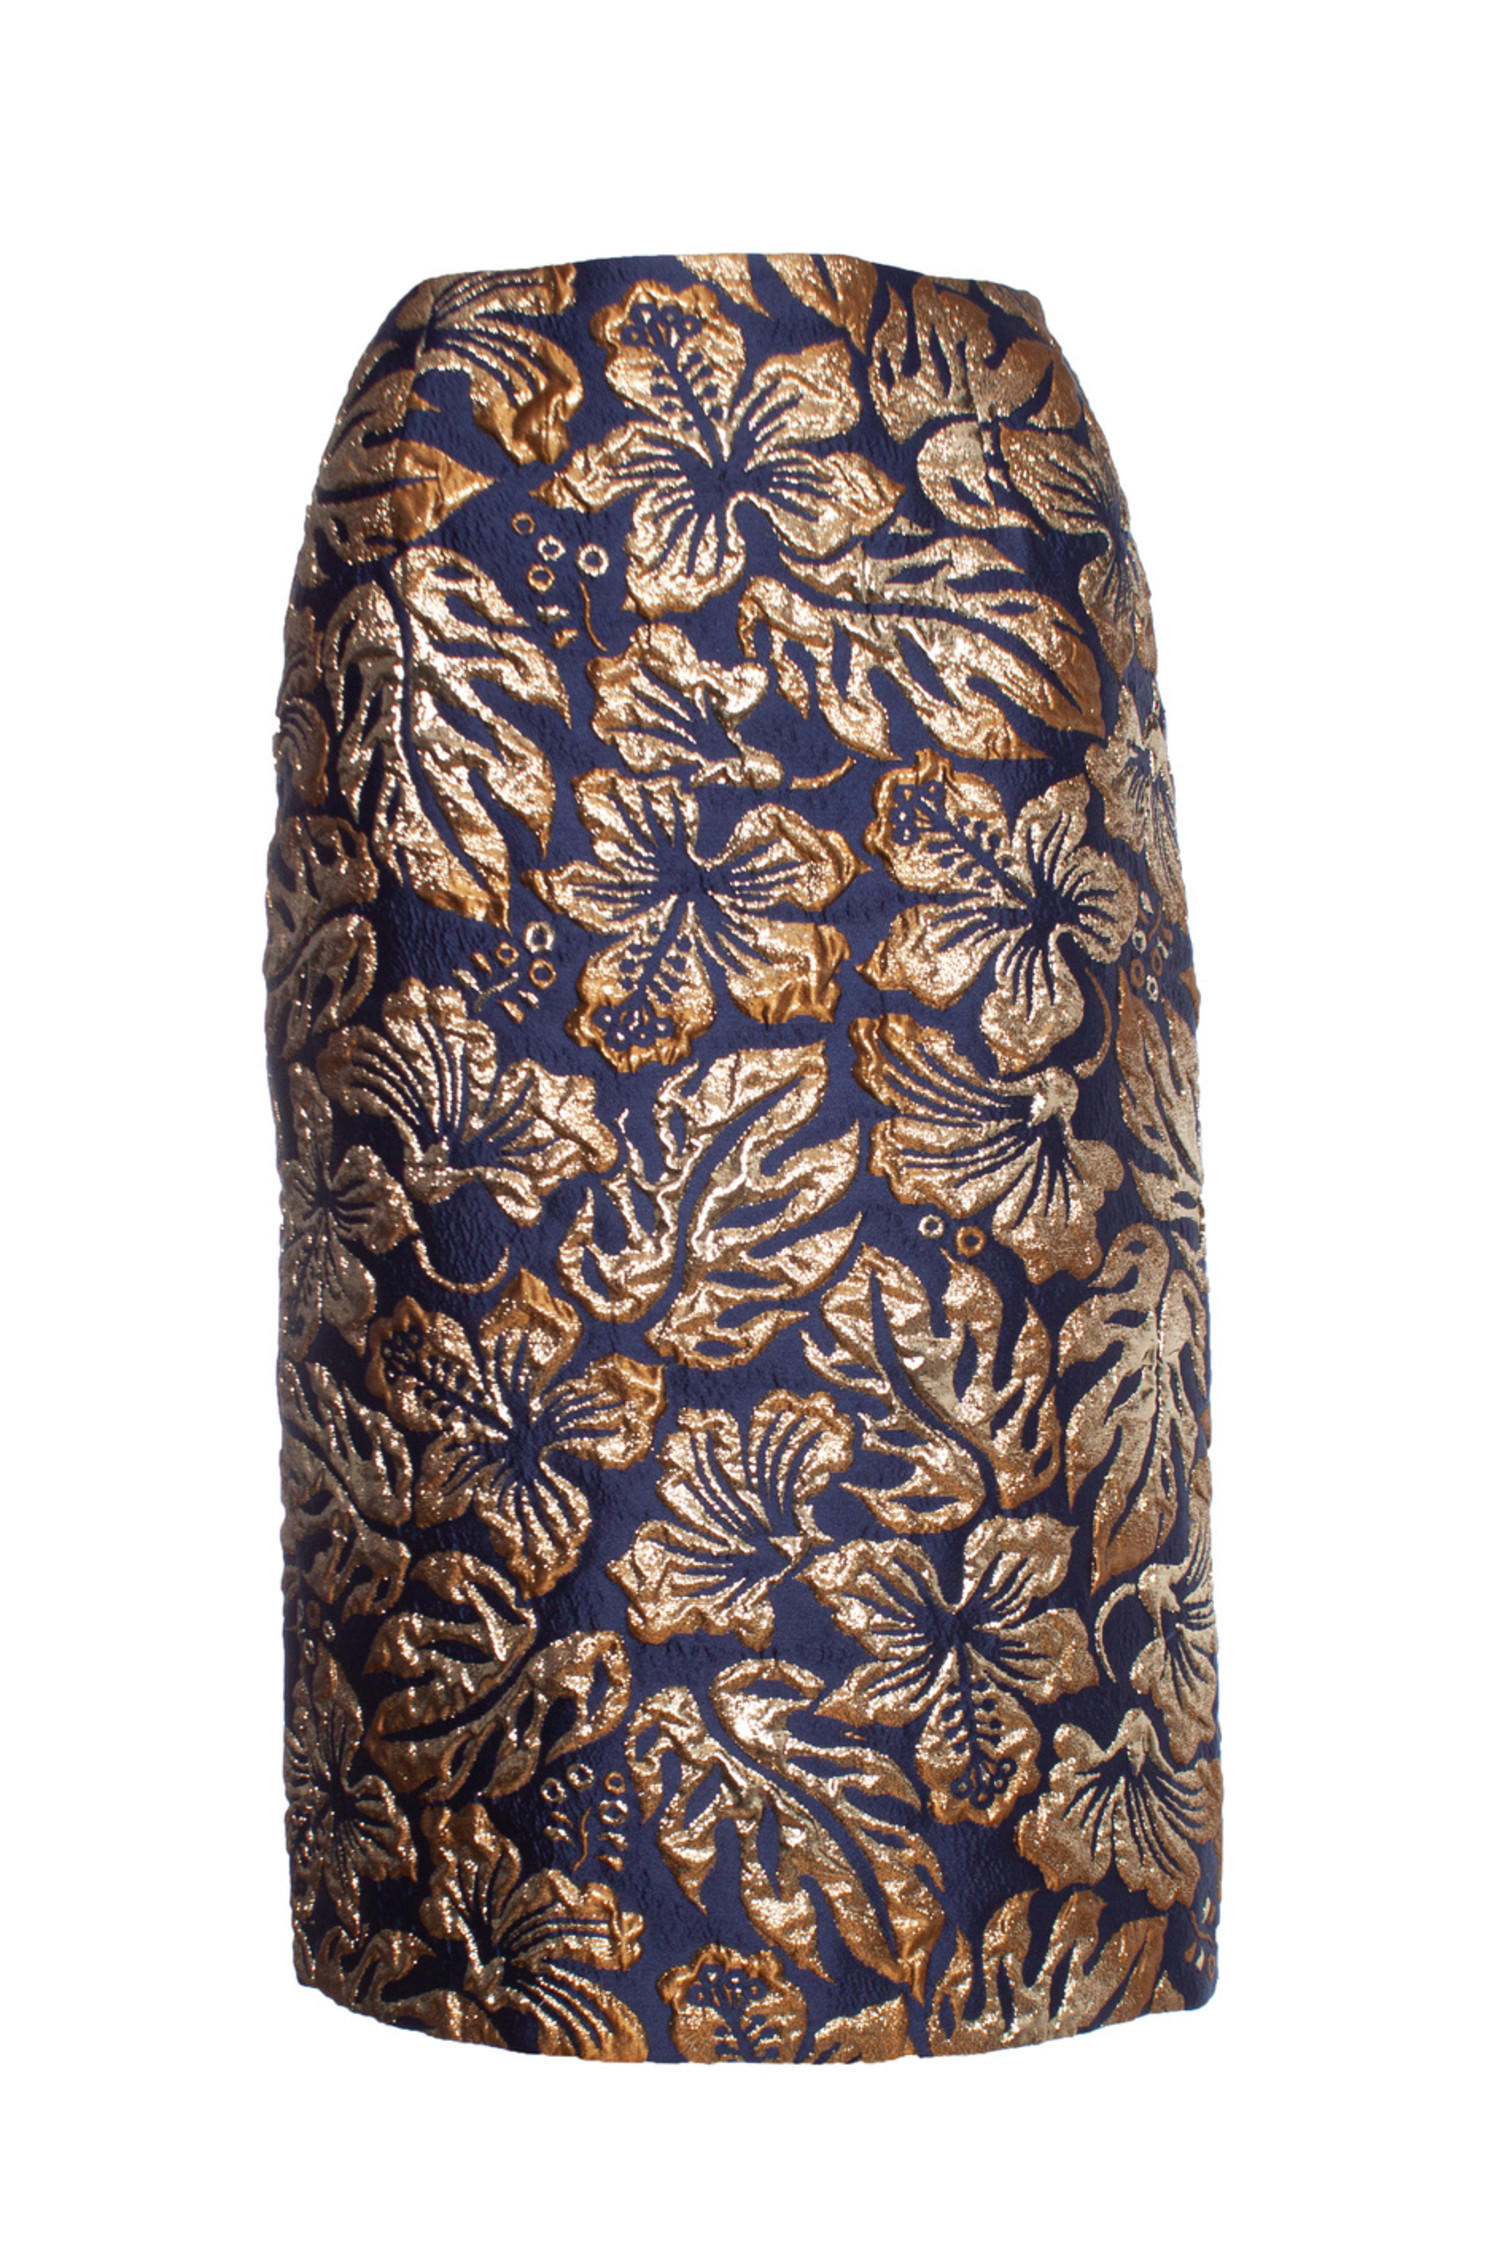 metallic floral skirt